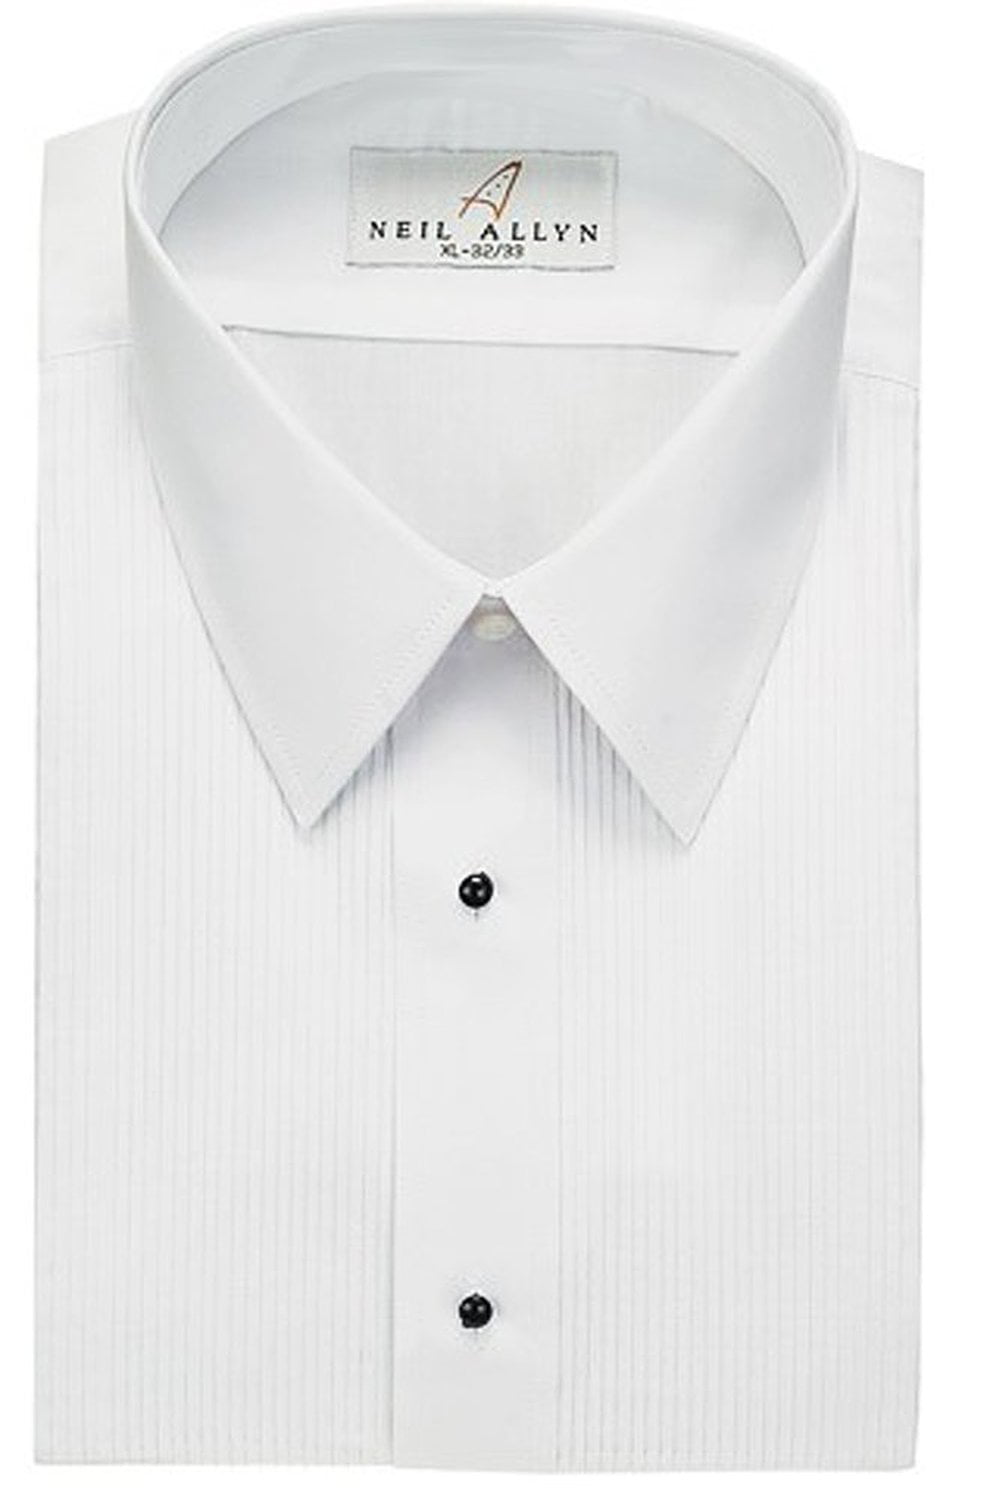 Neil Allyn Mens SLIM FIT Lay-Down Collar 1/4 Pleats Tuxedo Shirt